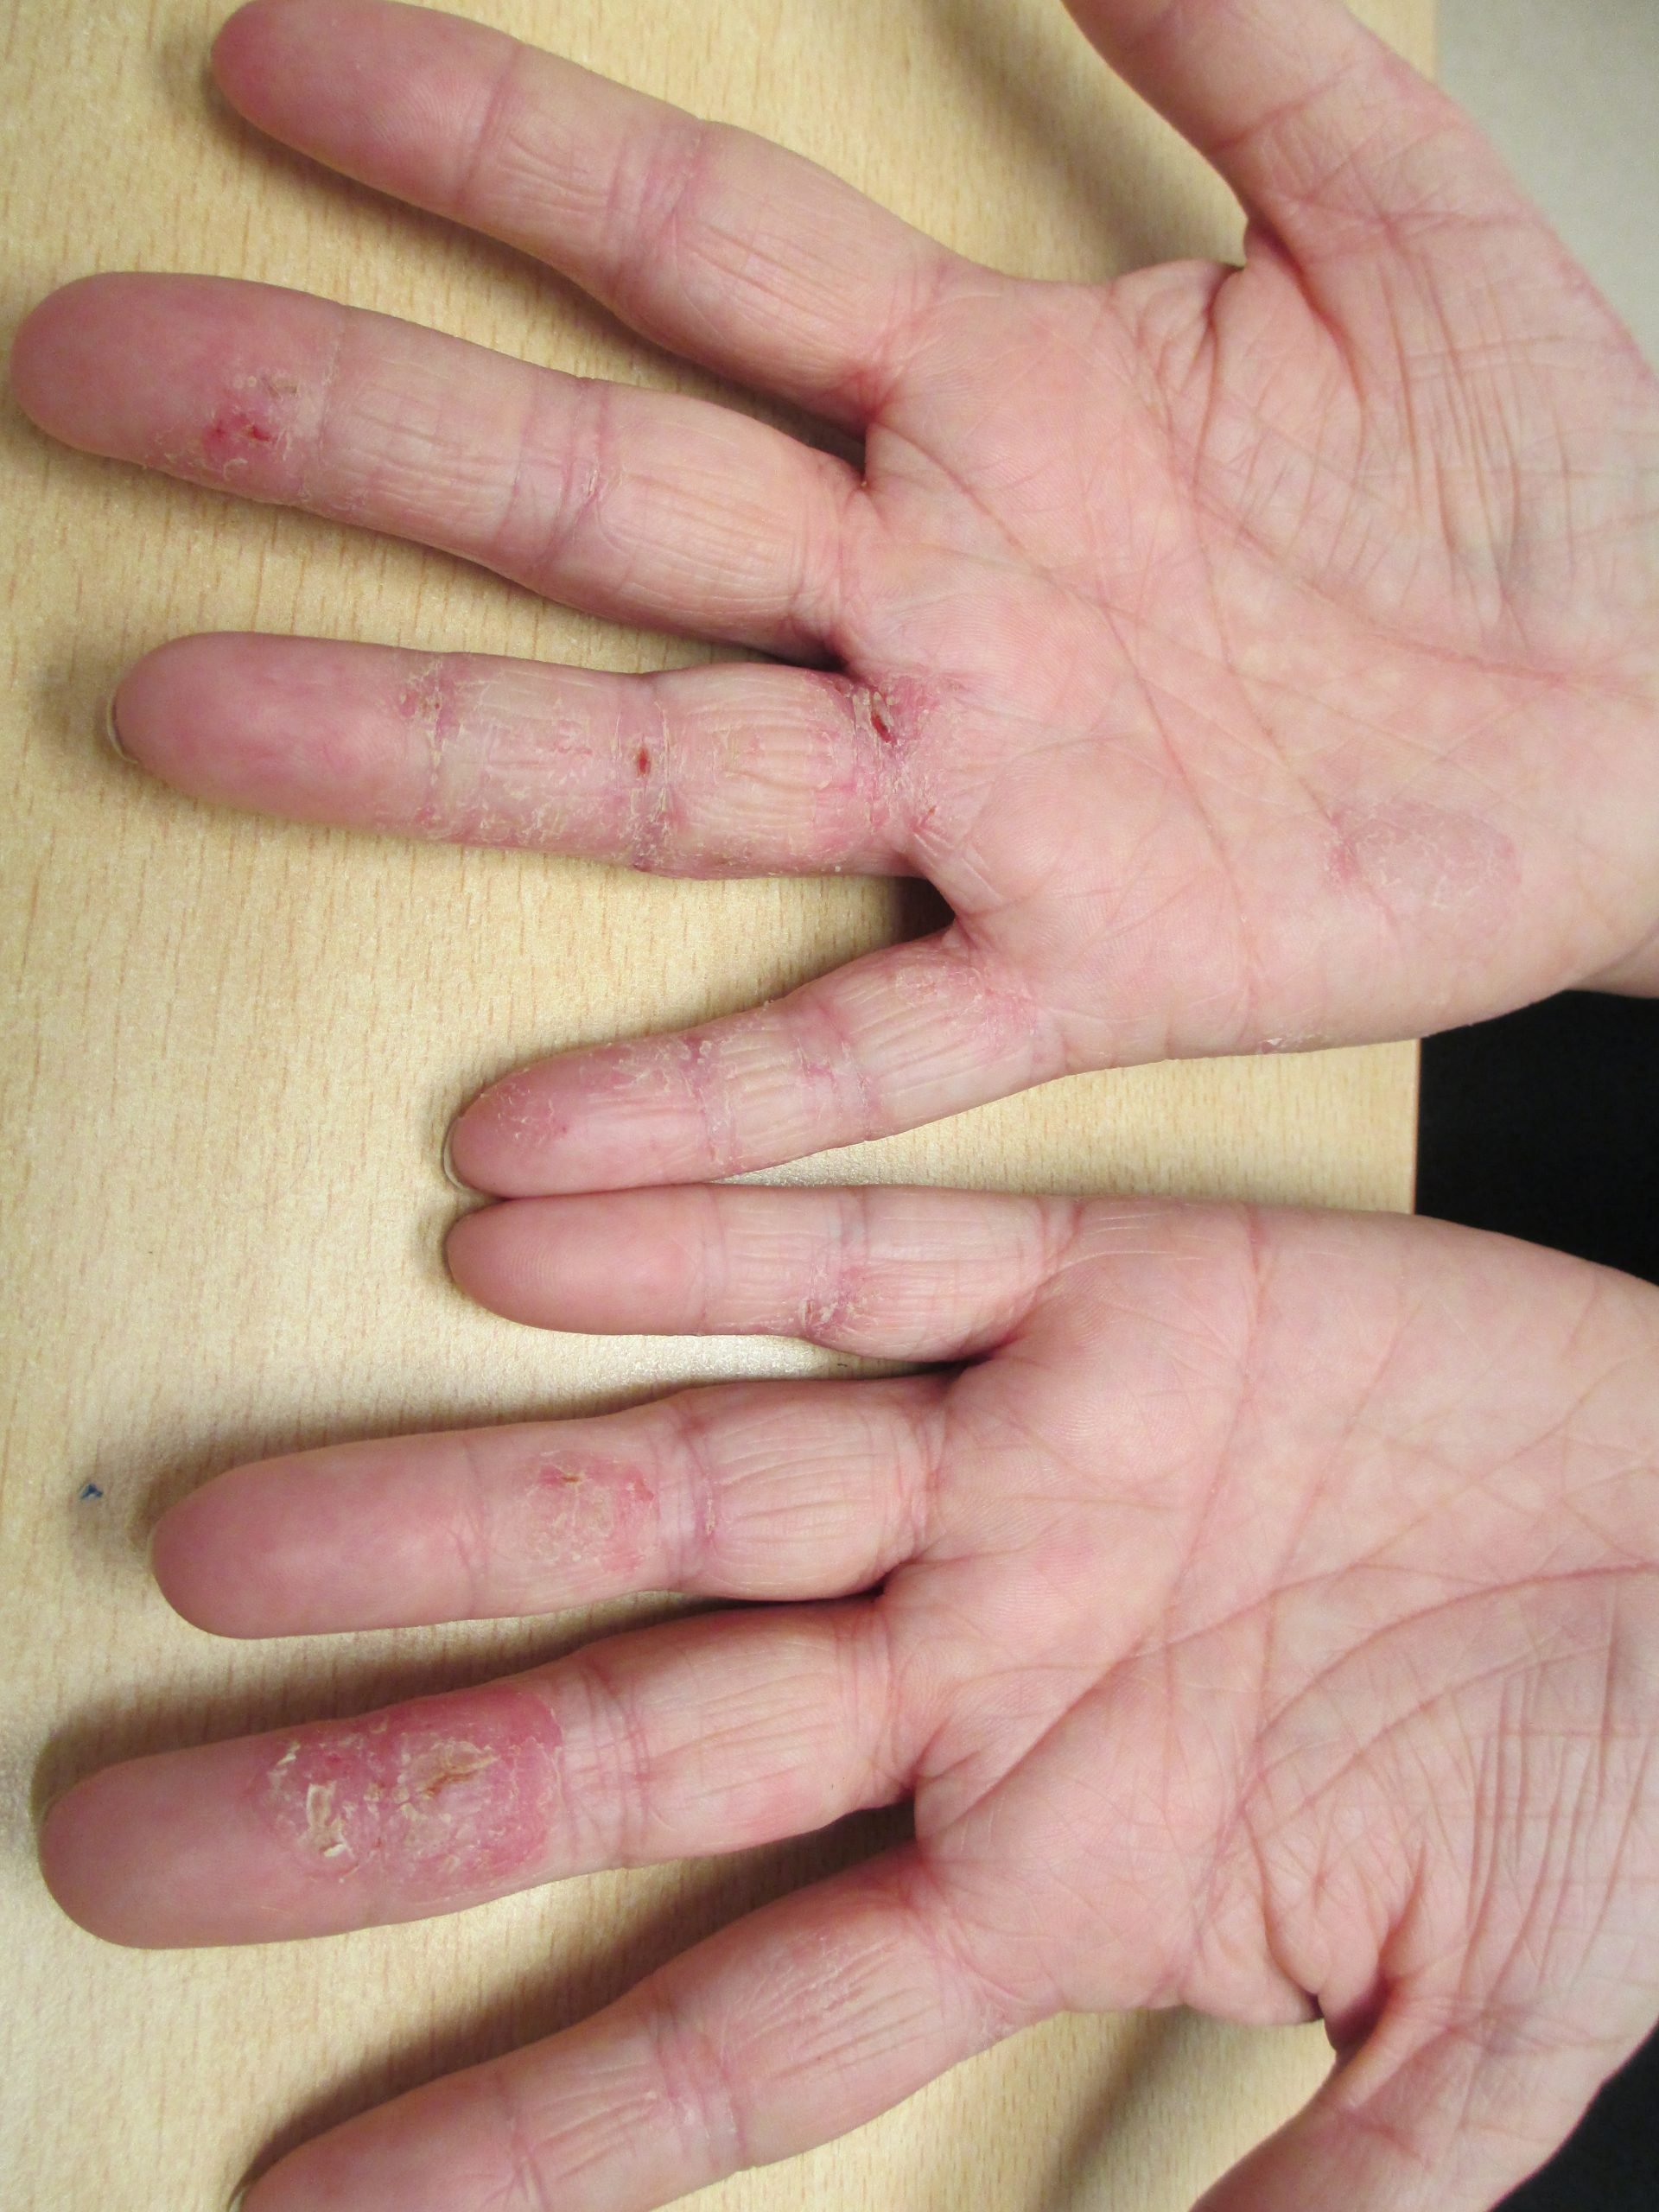 Eczema, Hand and Foot